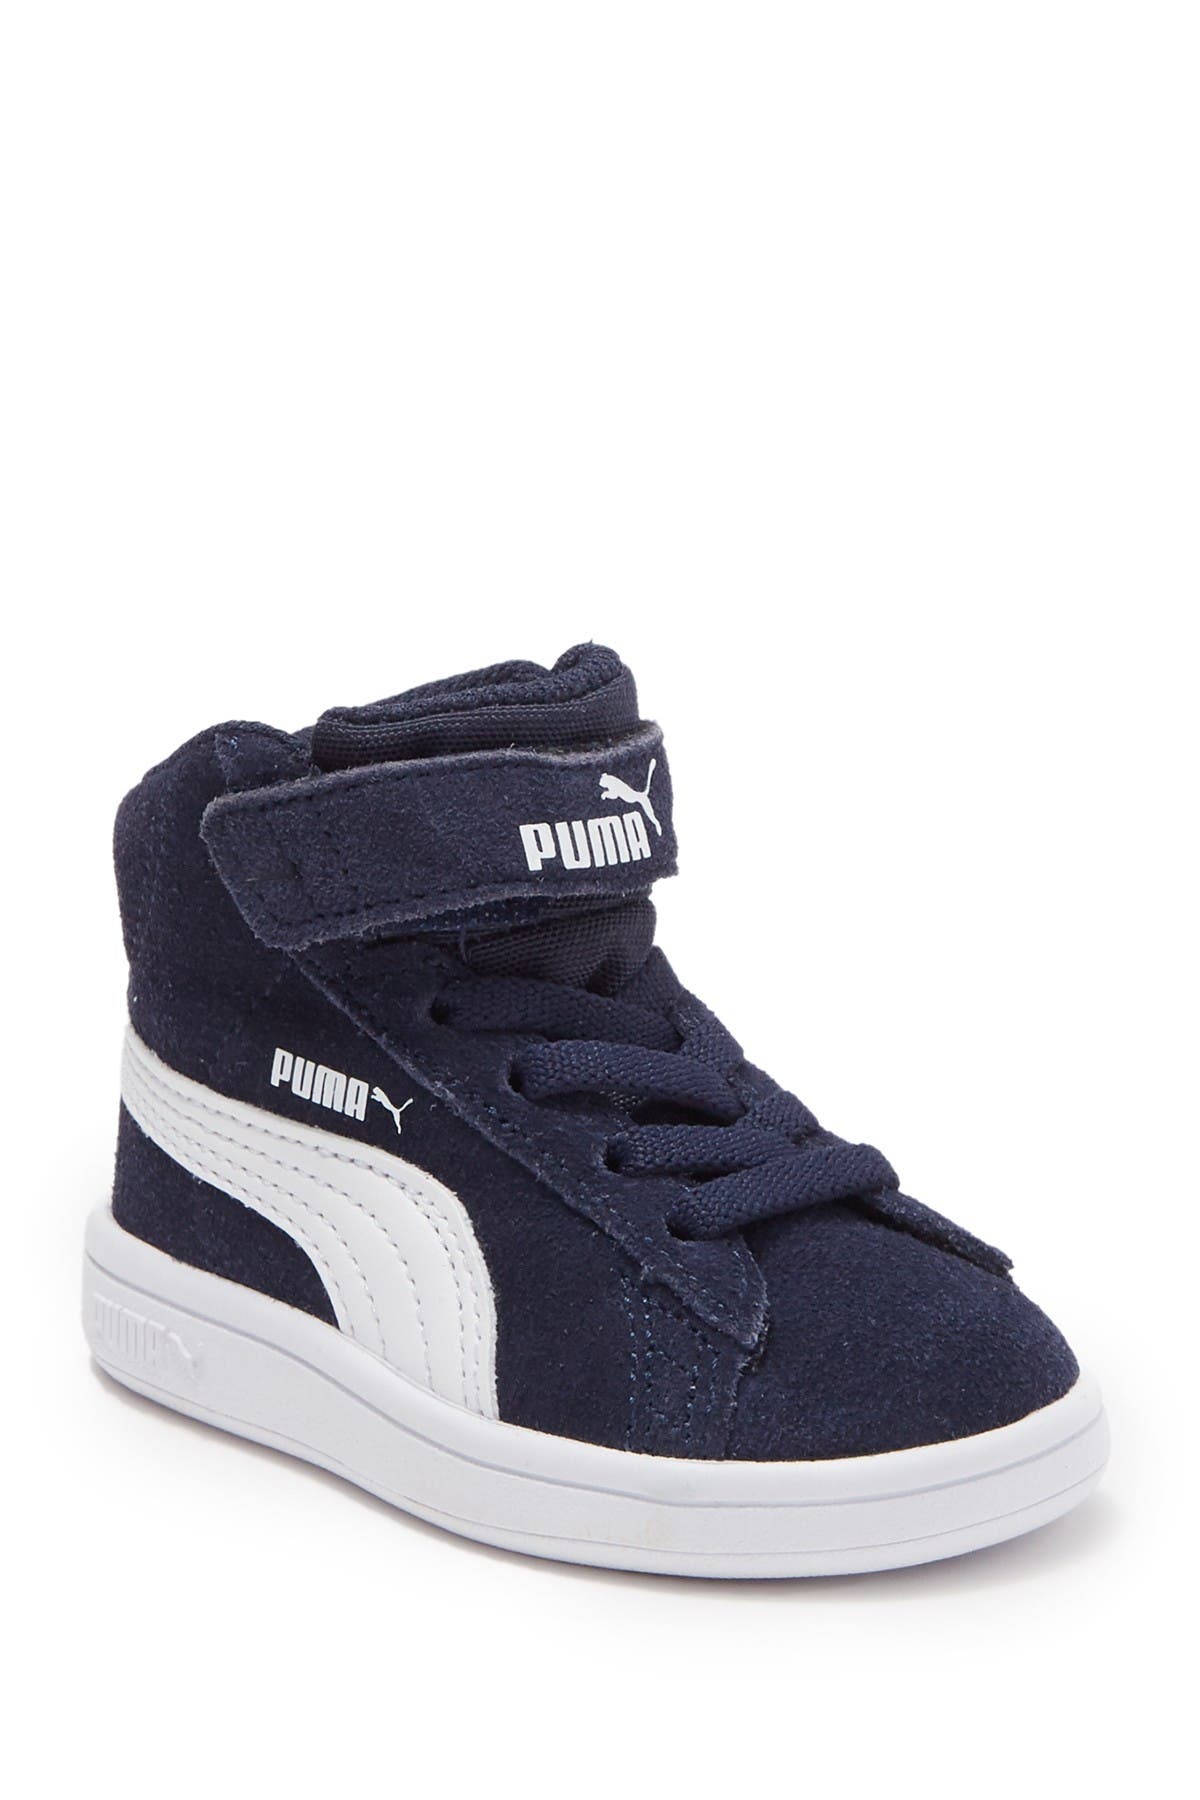 puma smash v2 mid sd sneakers